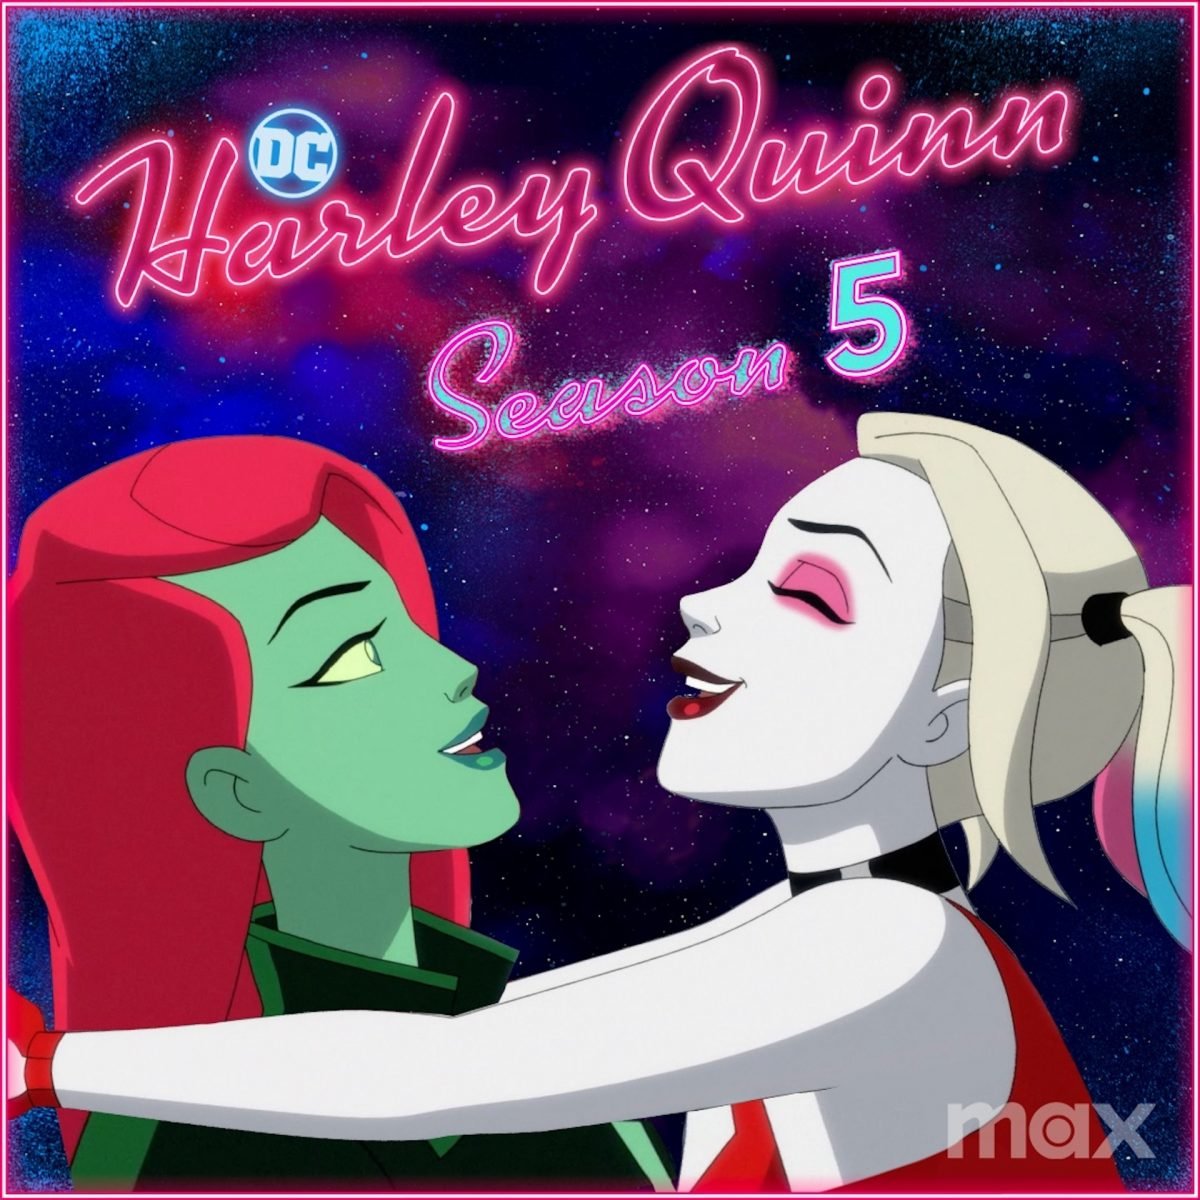 Harley Quinn season 5 renewal annoucement, Harley and Poison Ivy